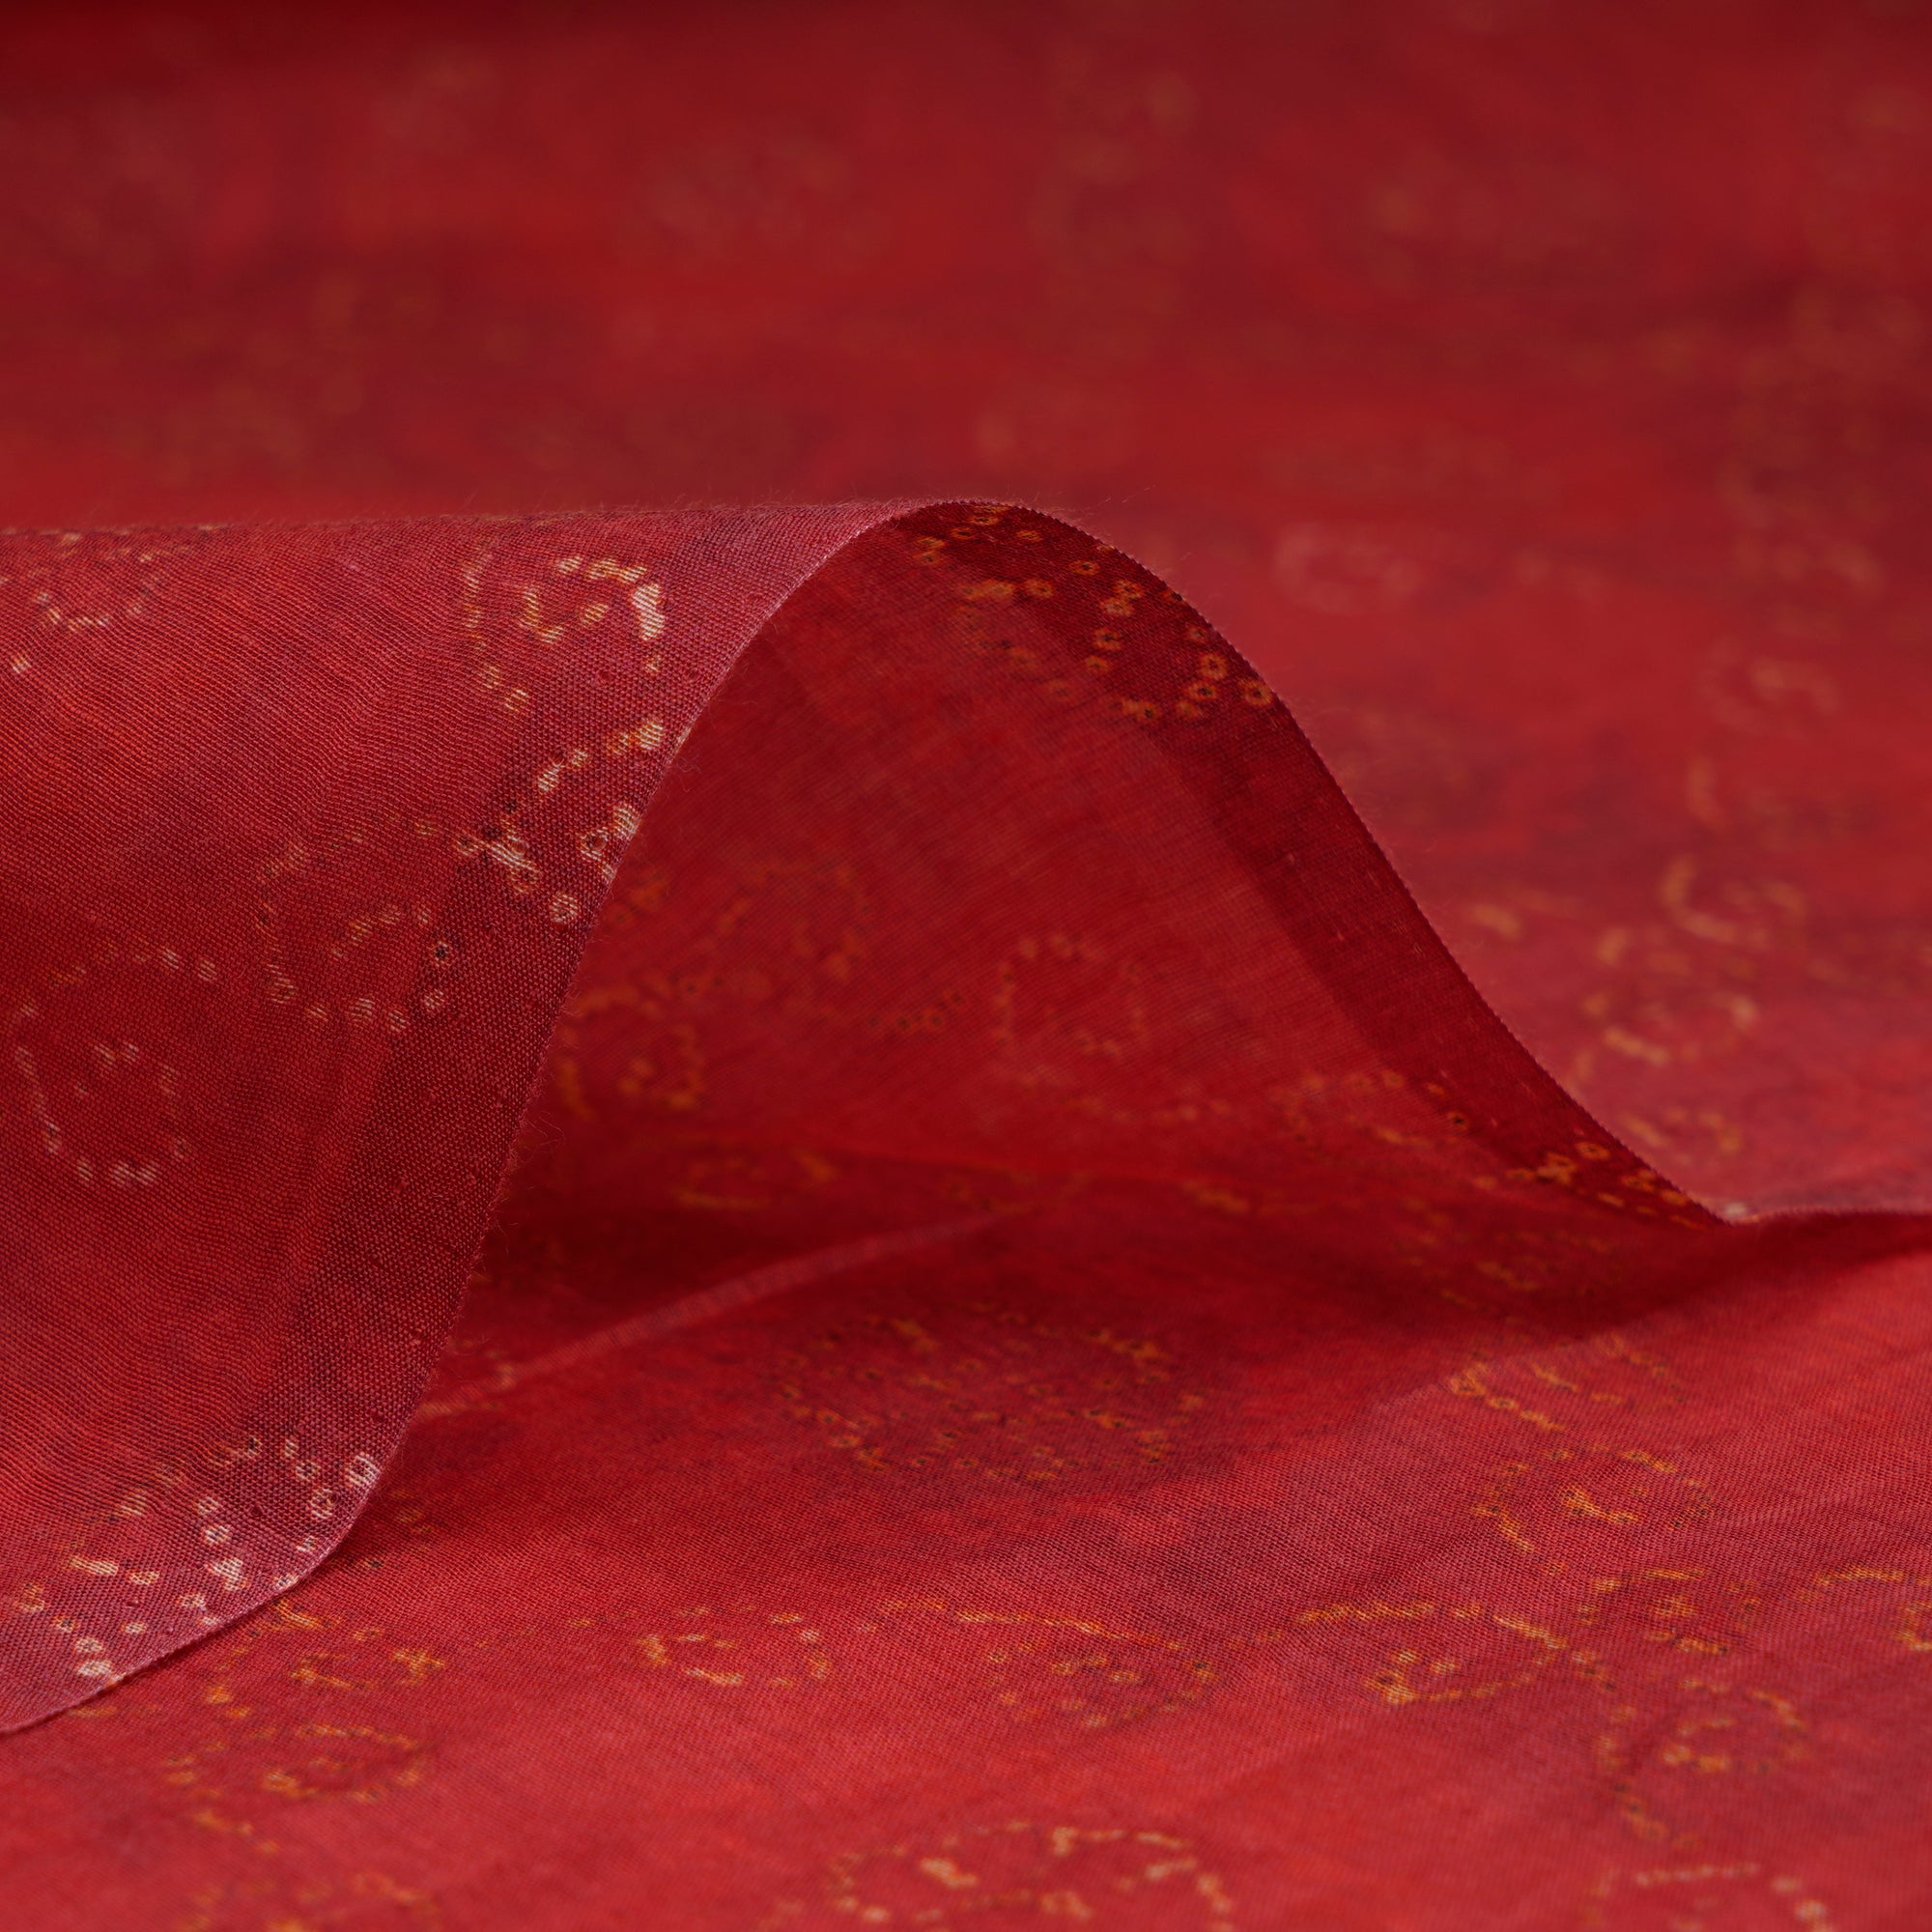 Red Color Digital Printed Chanderi Fabric